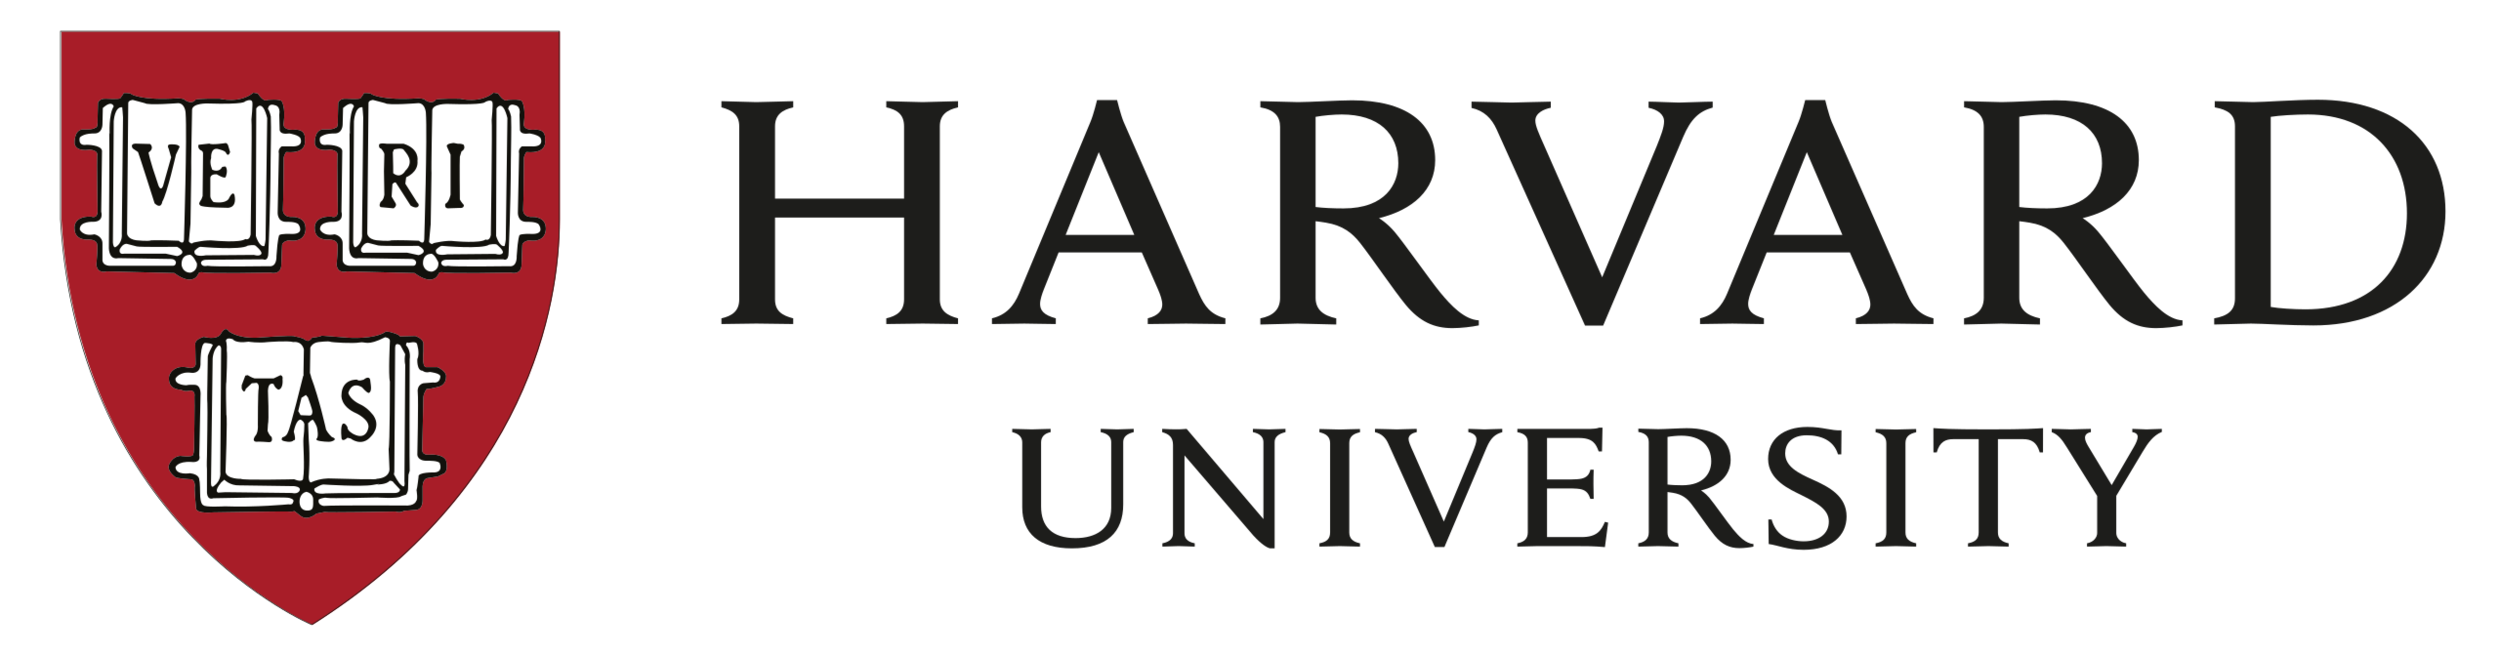 2560px-Harvard_University_logo.svg.png